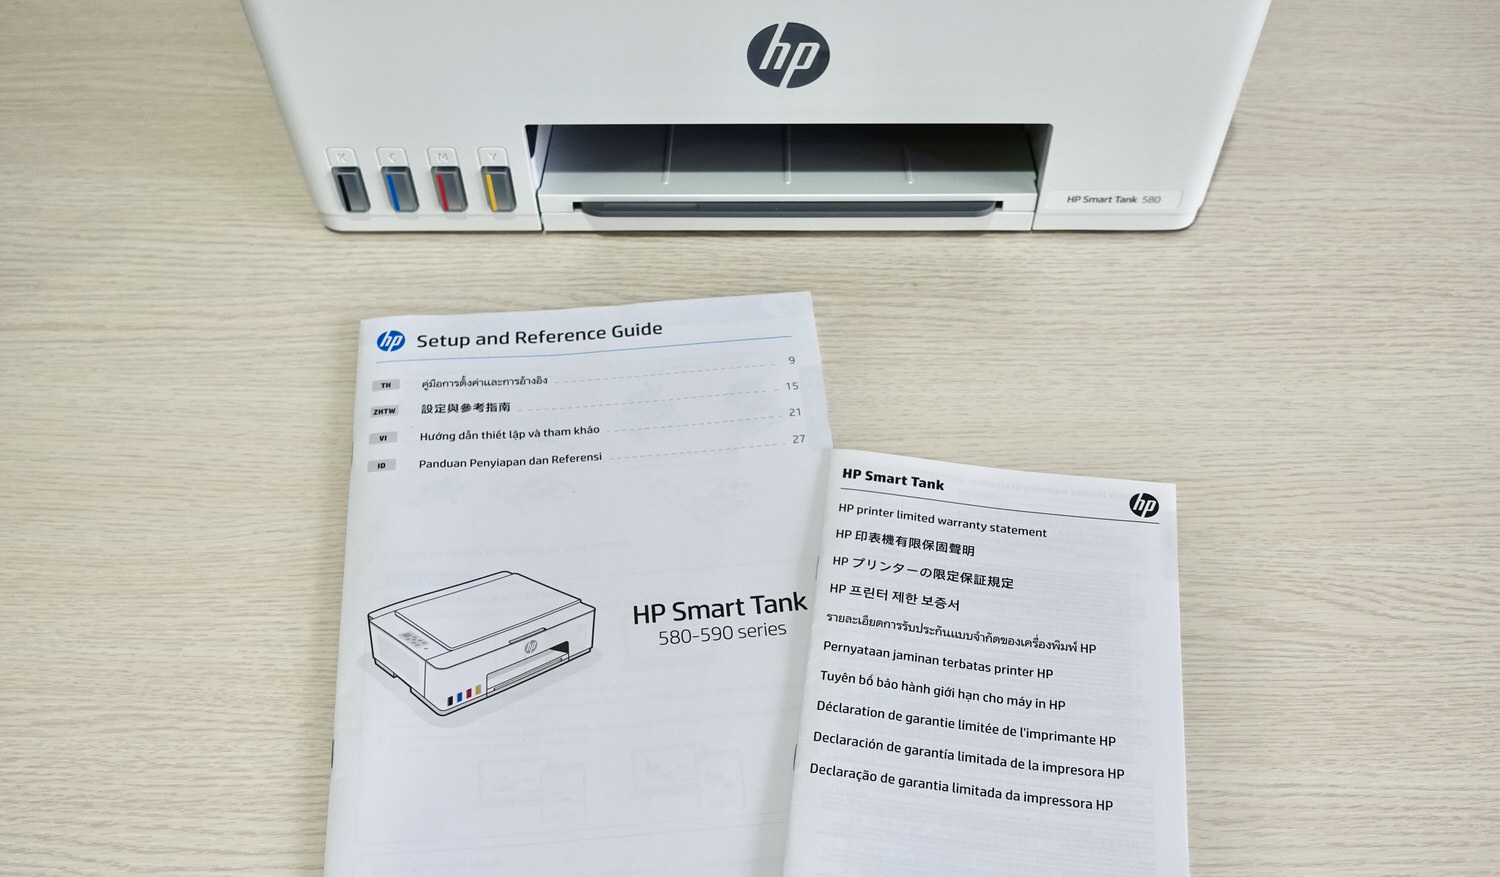 HP SMART TANK 580